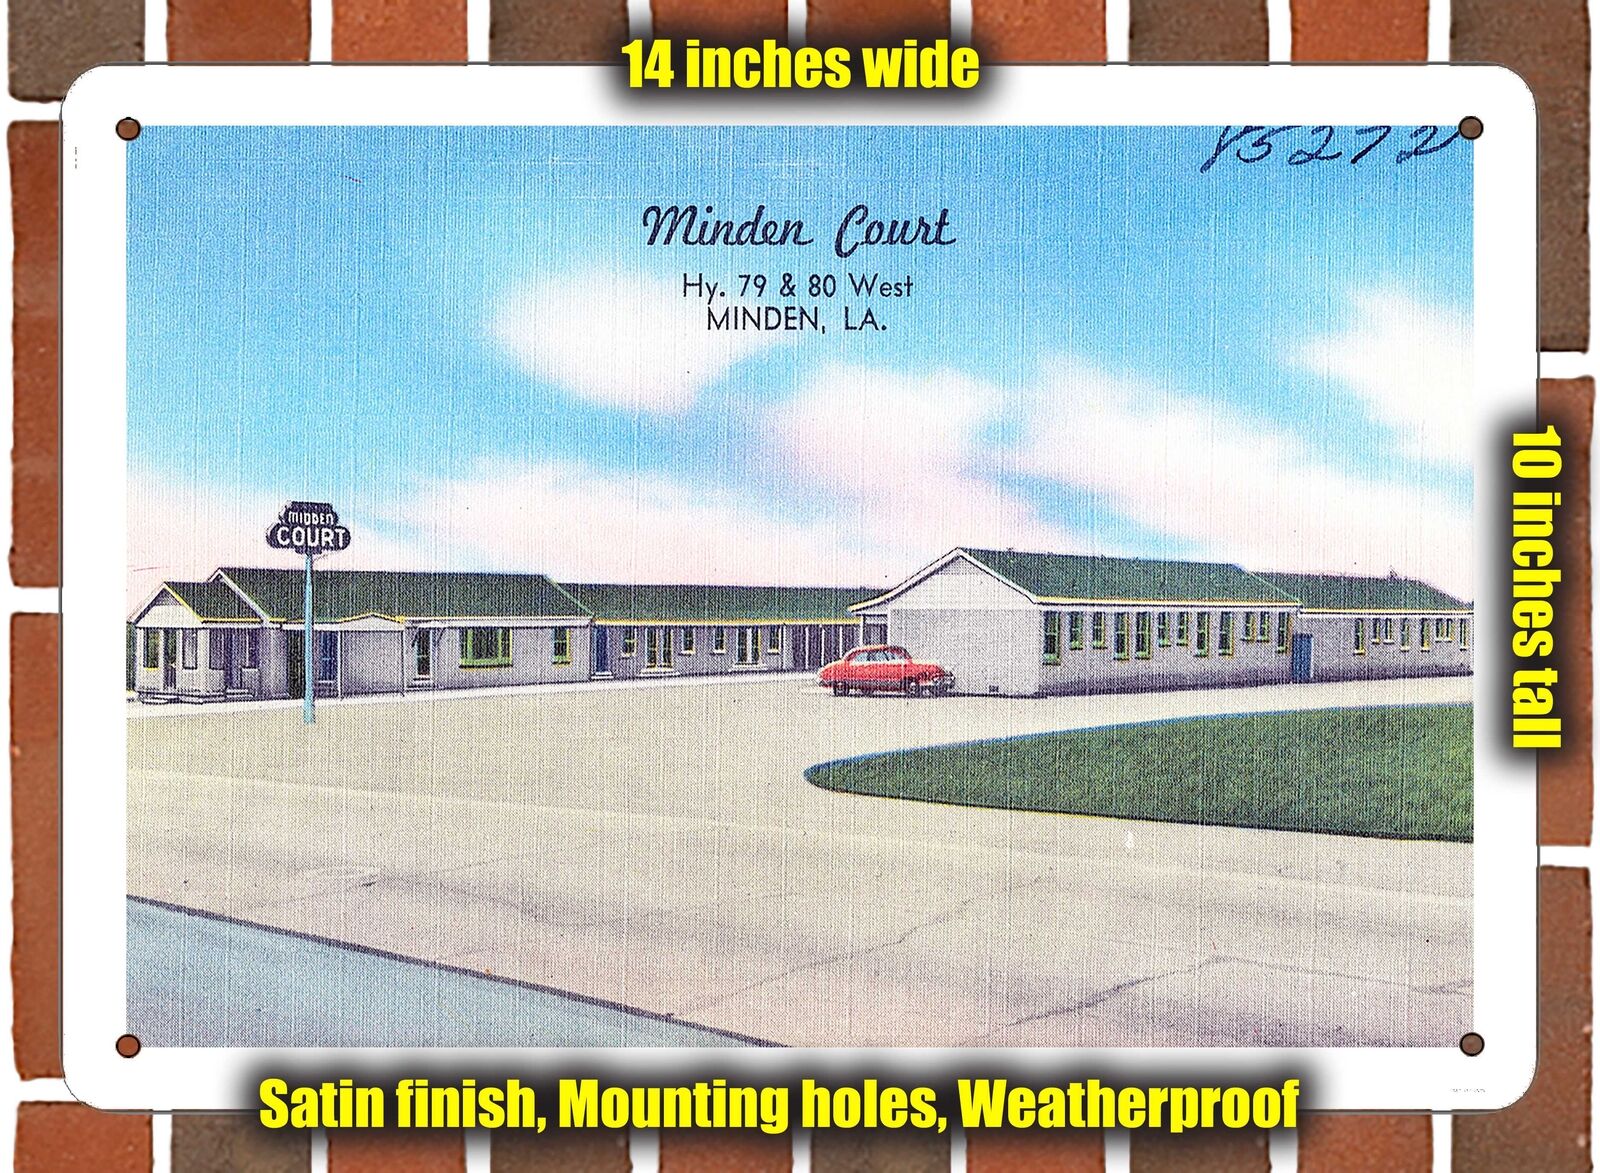 METAL SIGN - Louisiana Postcard - Minden Court, Hy. 79 & 80 West, Minden, La.